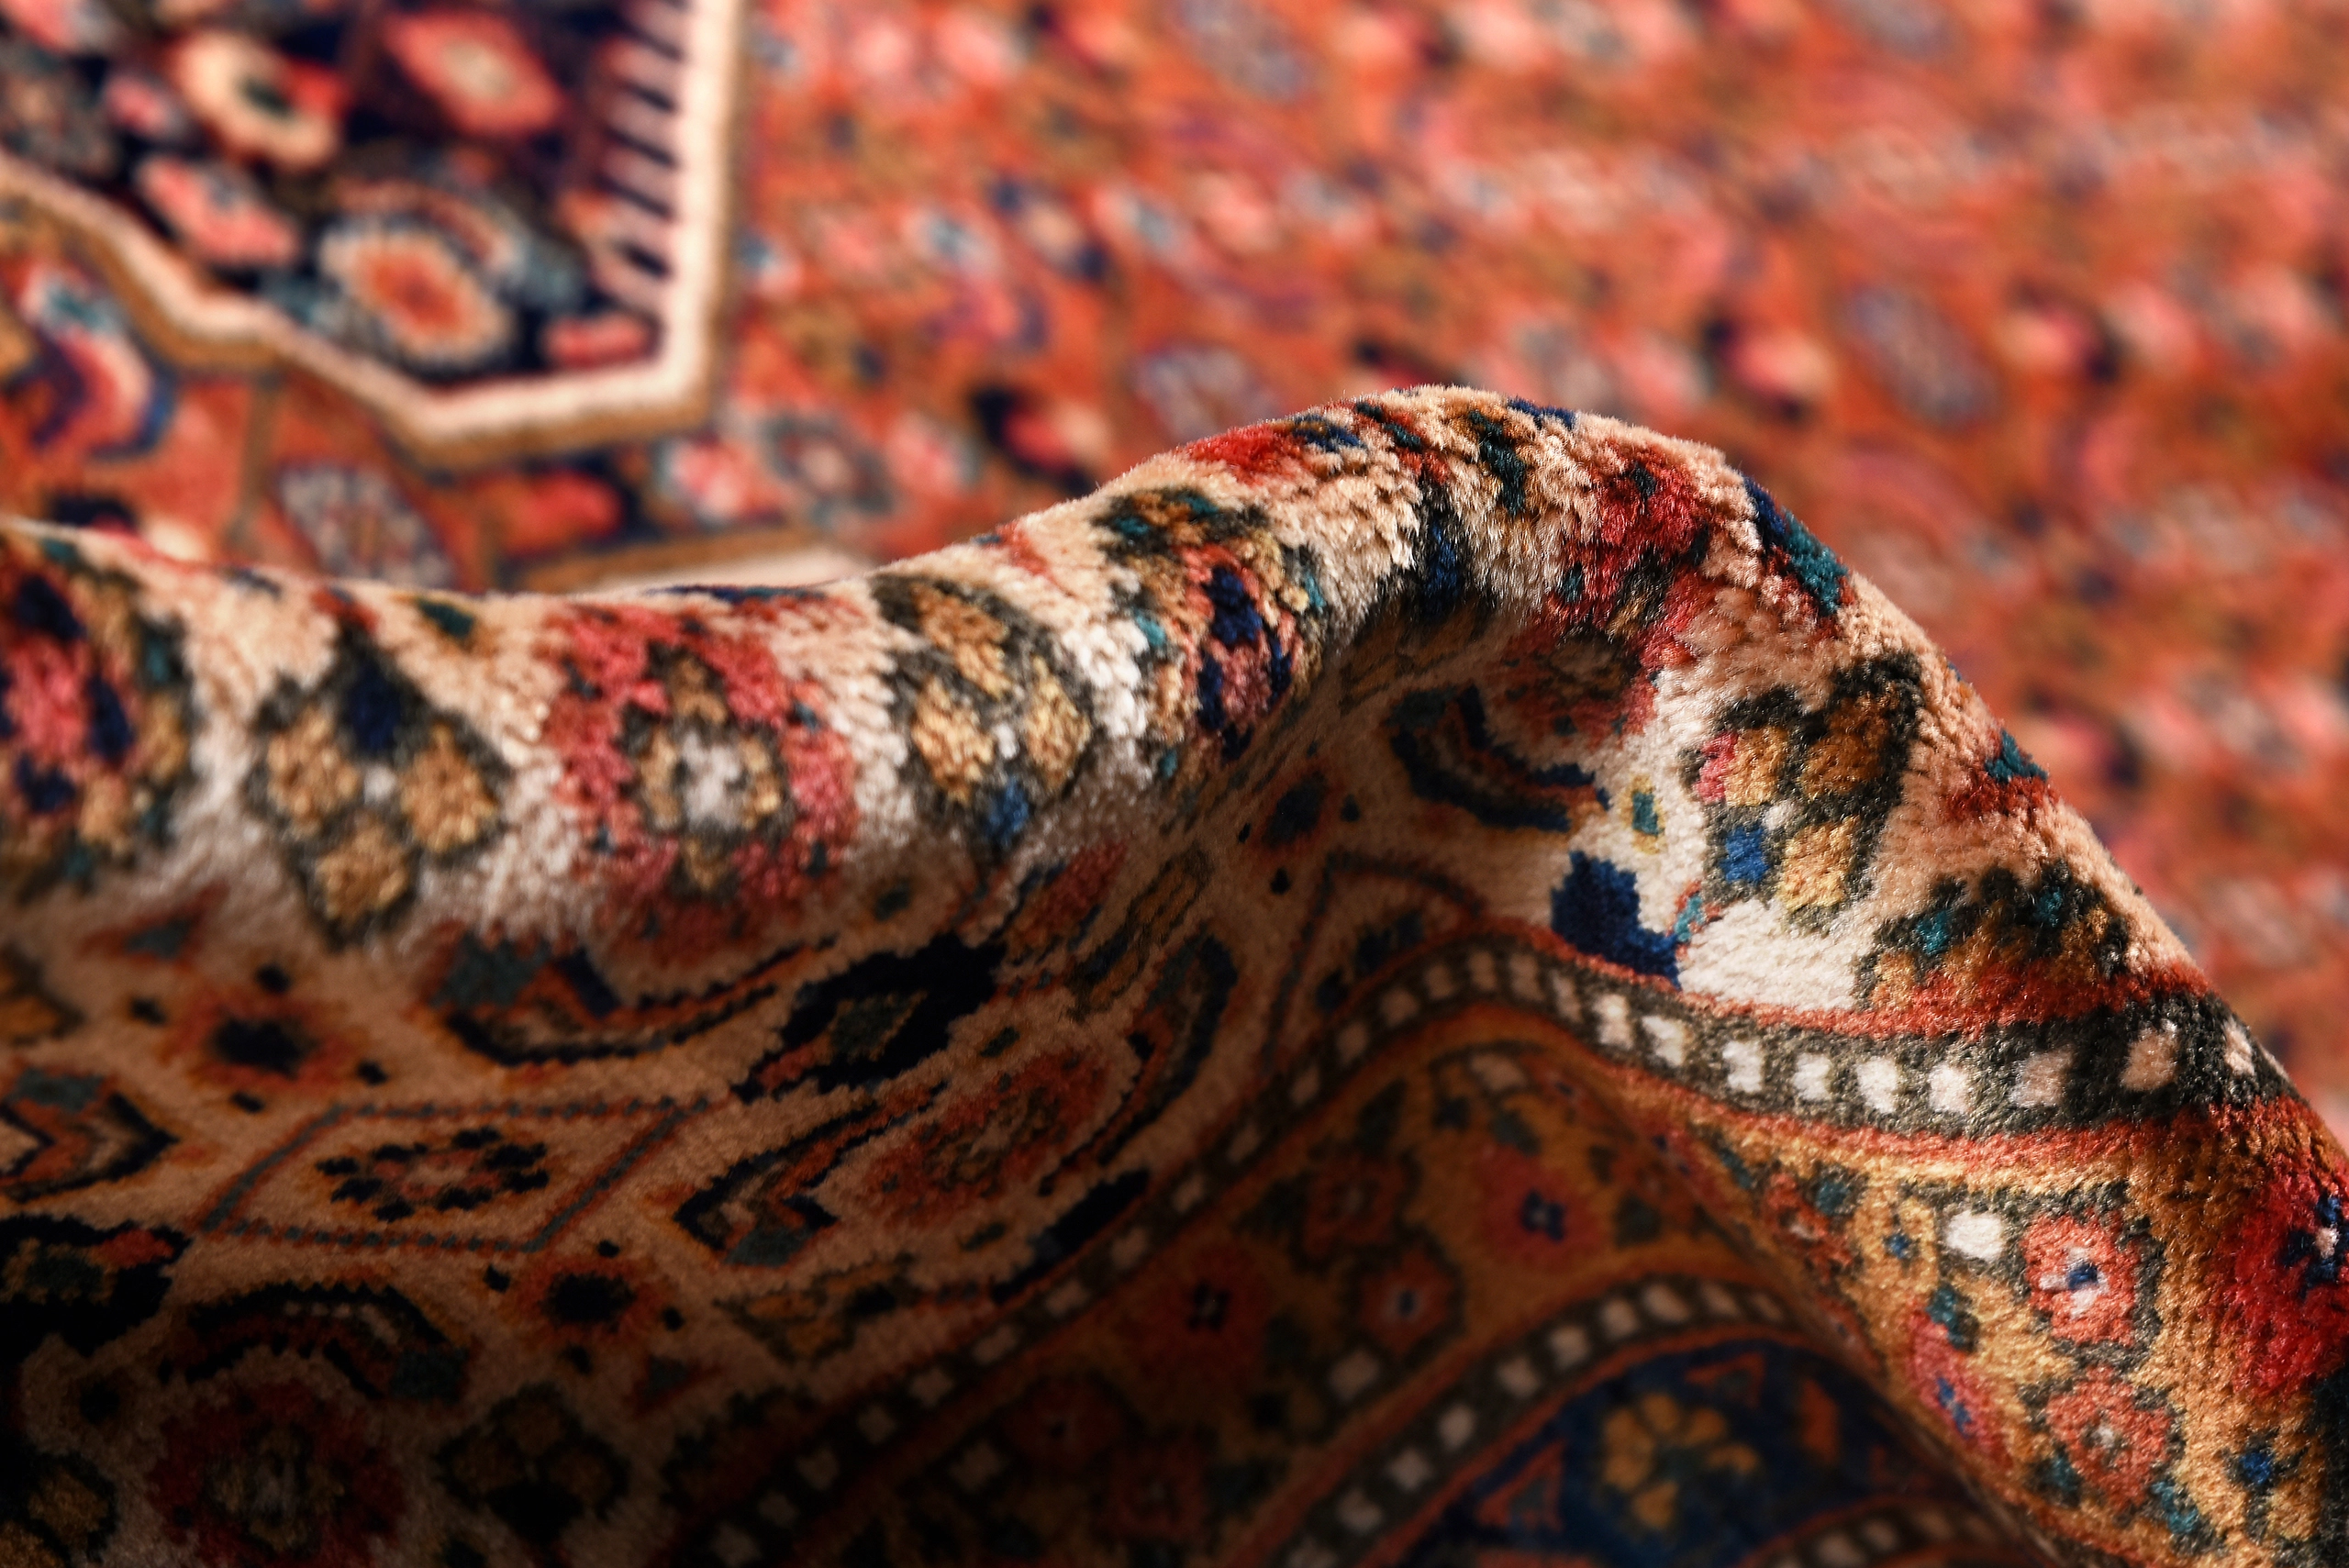 Semi-Antique Persian Mud Rug, Mahi Design ~1970